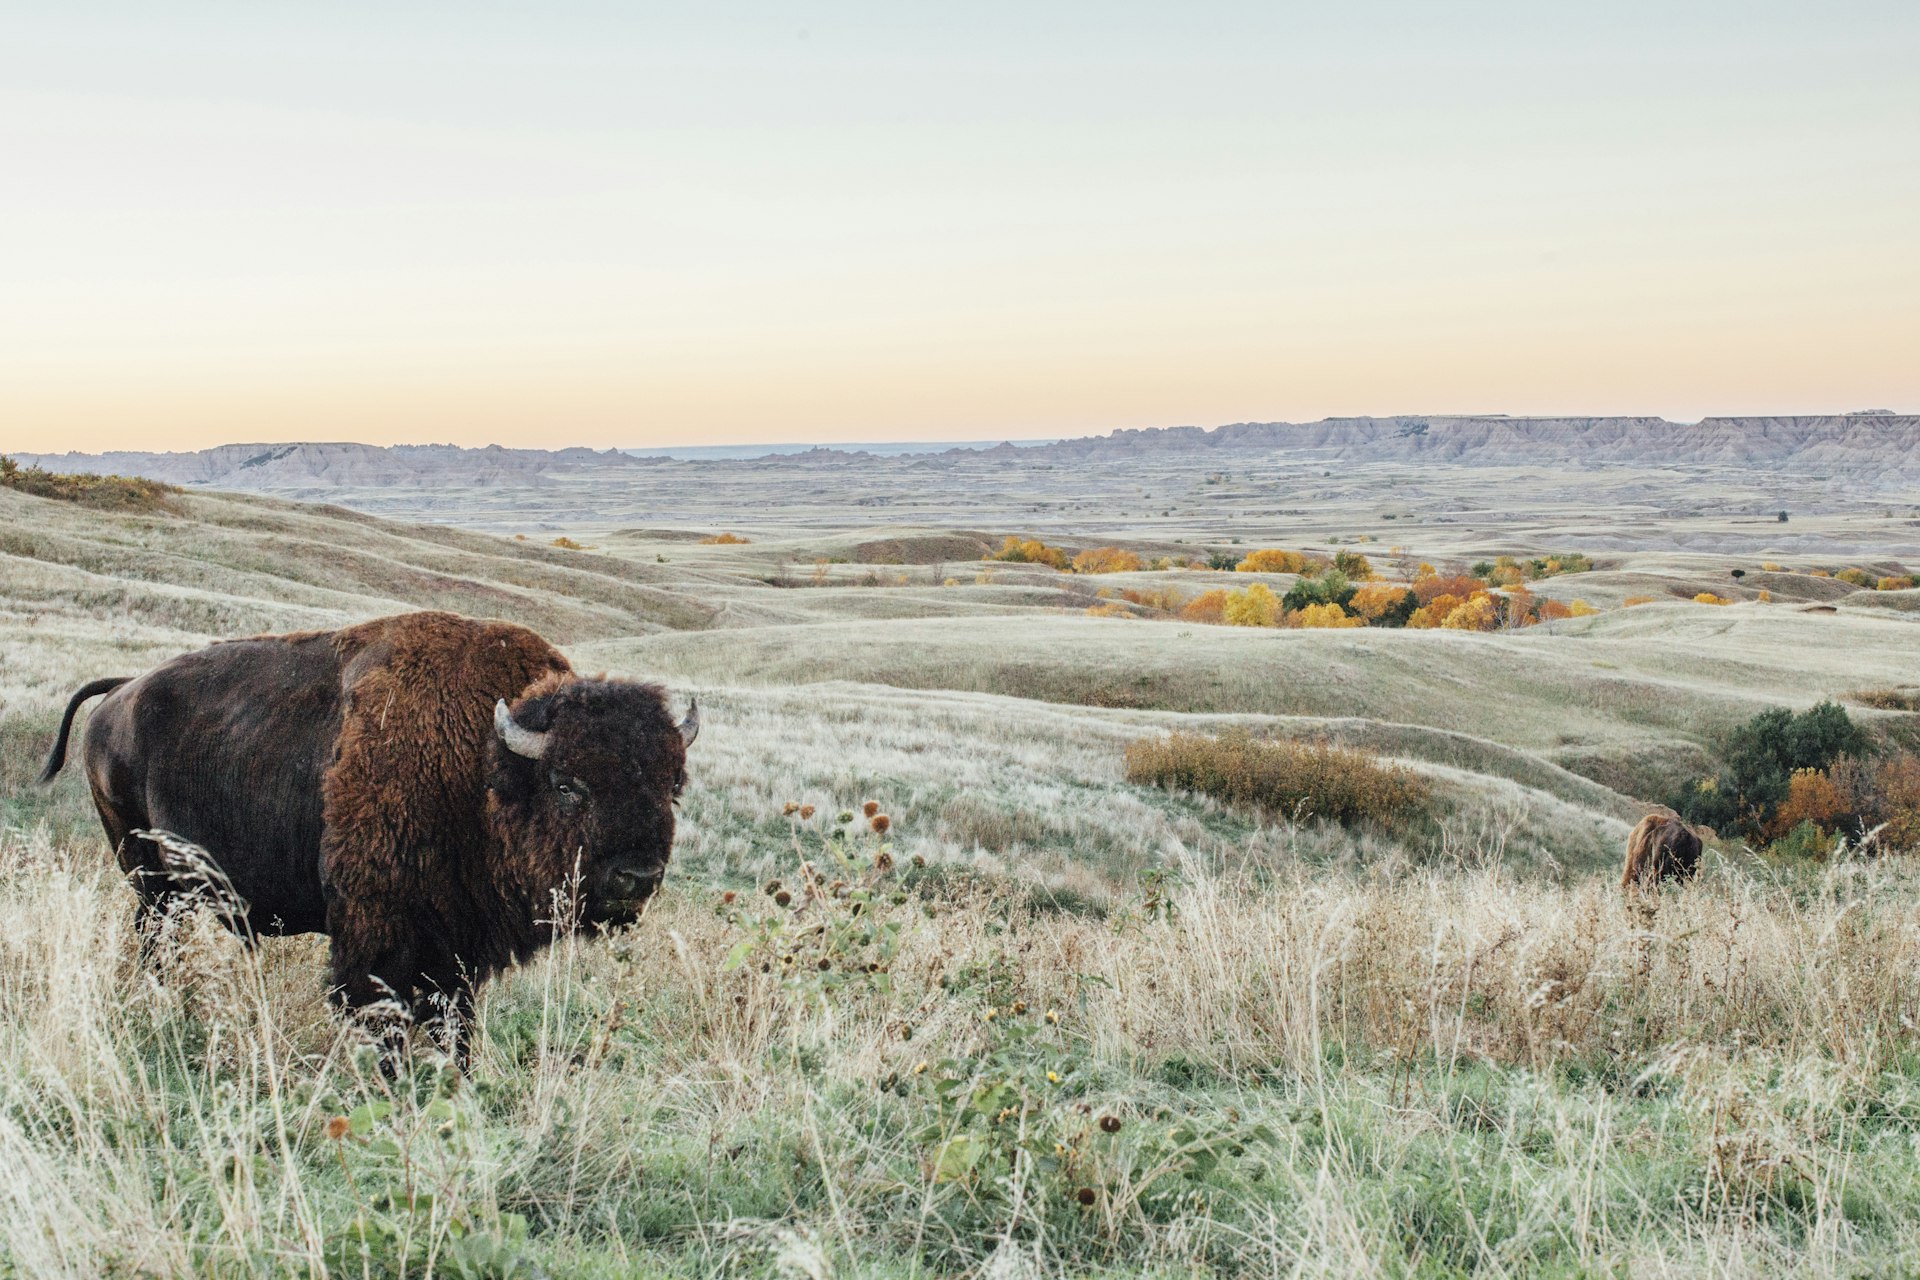 An american bison in Custer State Park, South Dakota